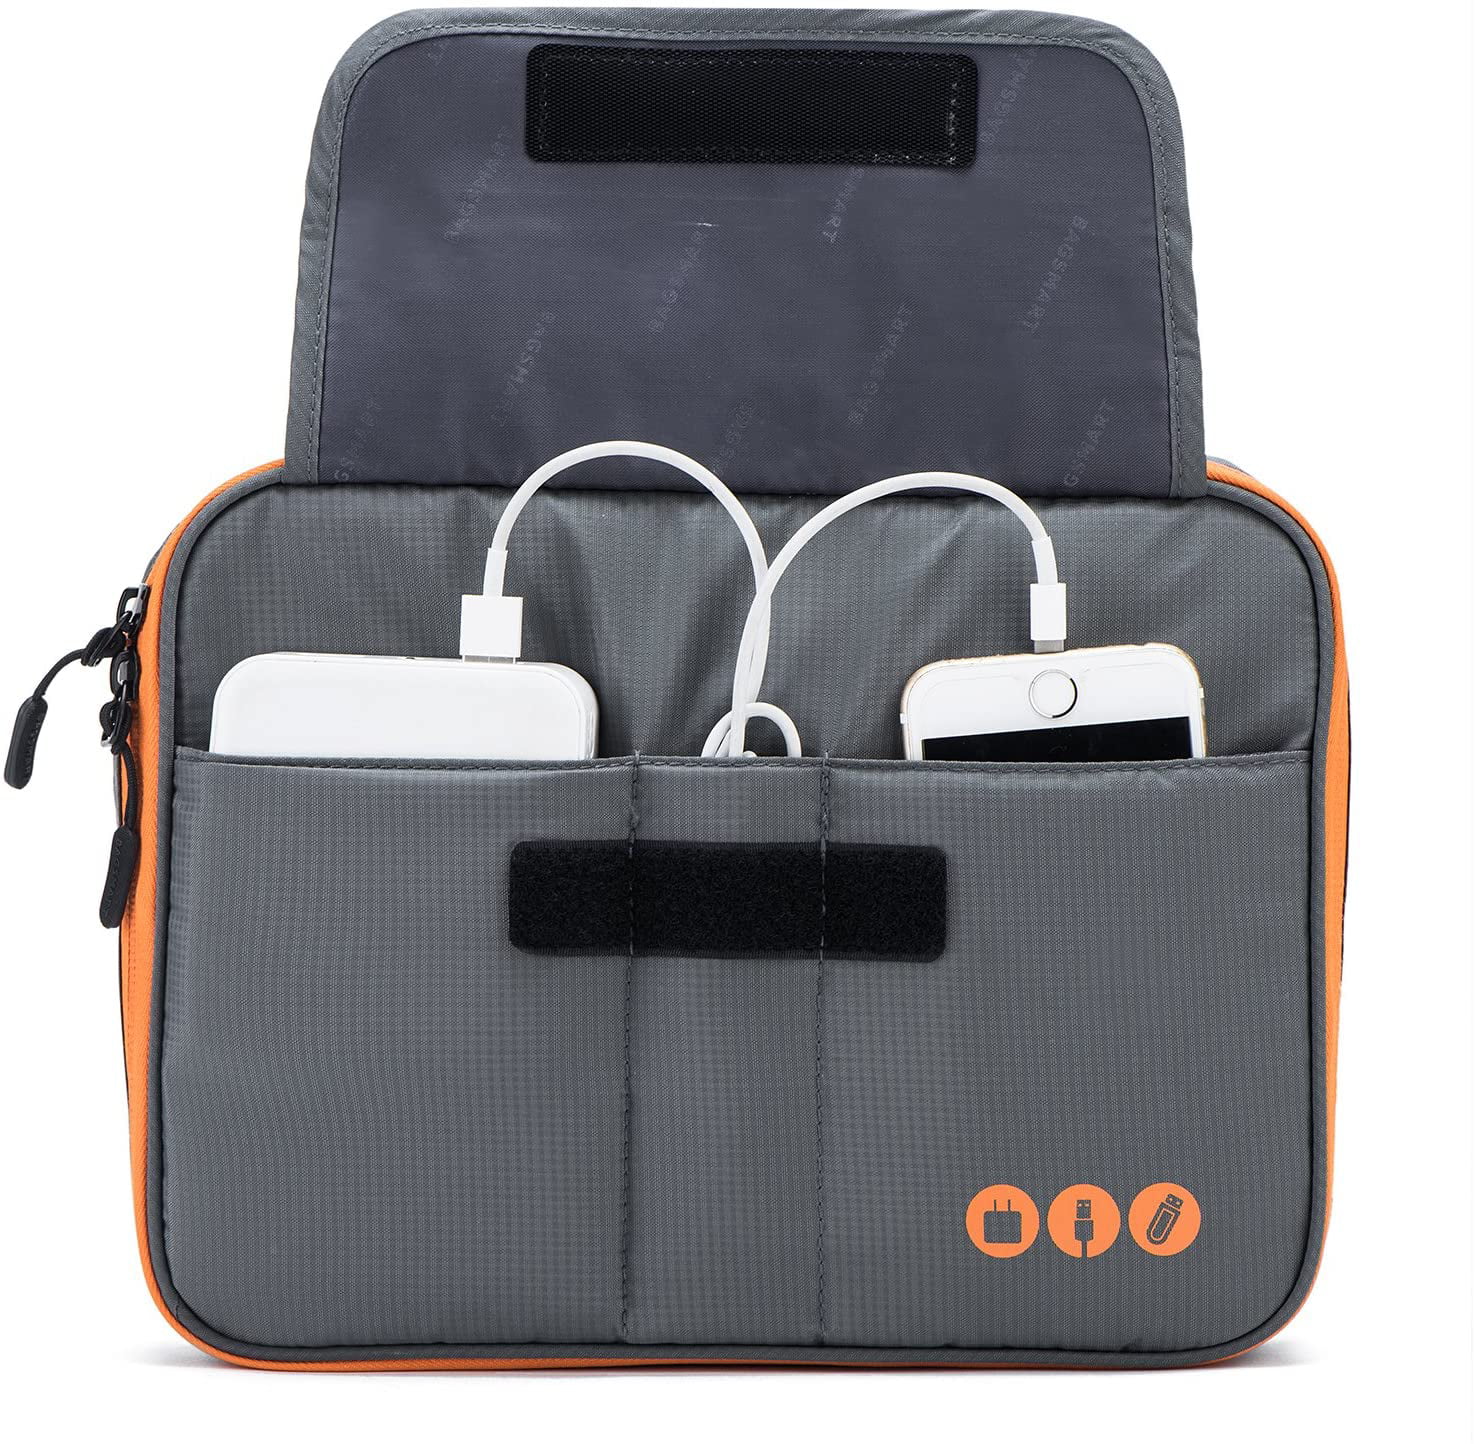 iPhone Chargers Blue 9.7 Ipad Pro Kindle BAGSMART Electronics Travel Organizer Bag for Adaptors ipad air ipad Mini 